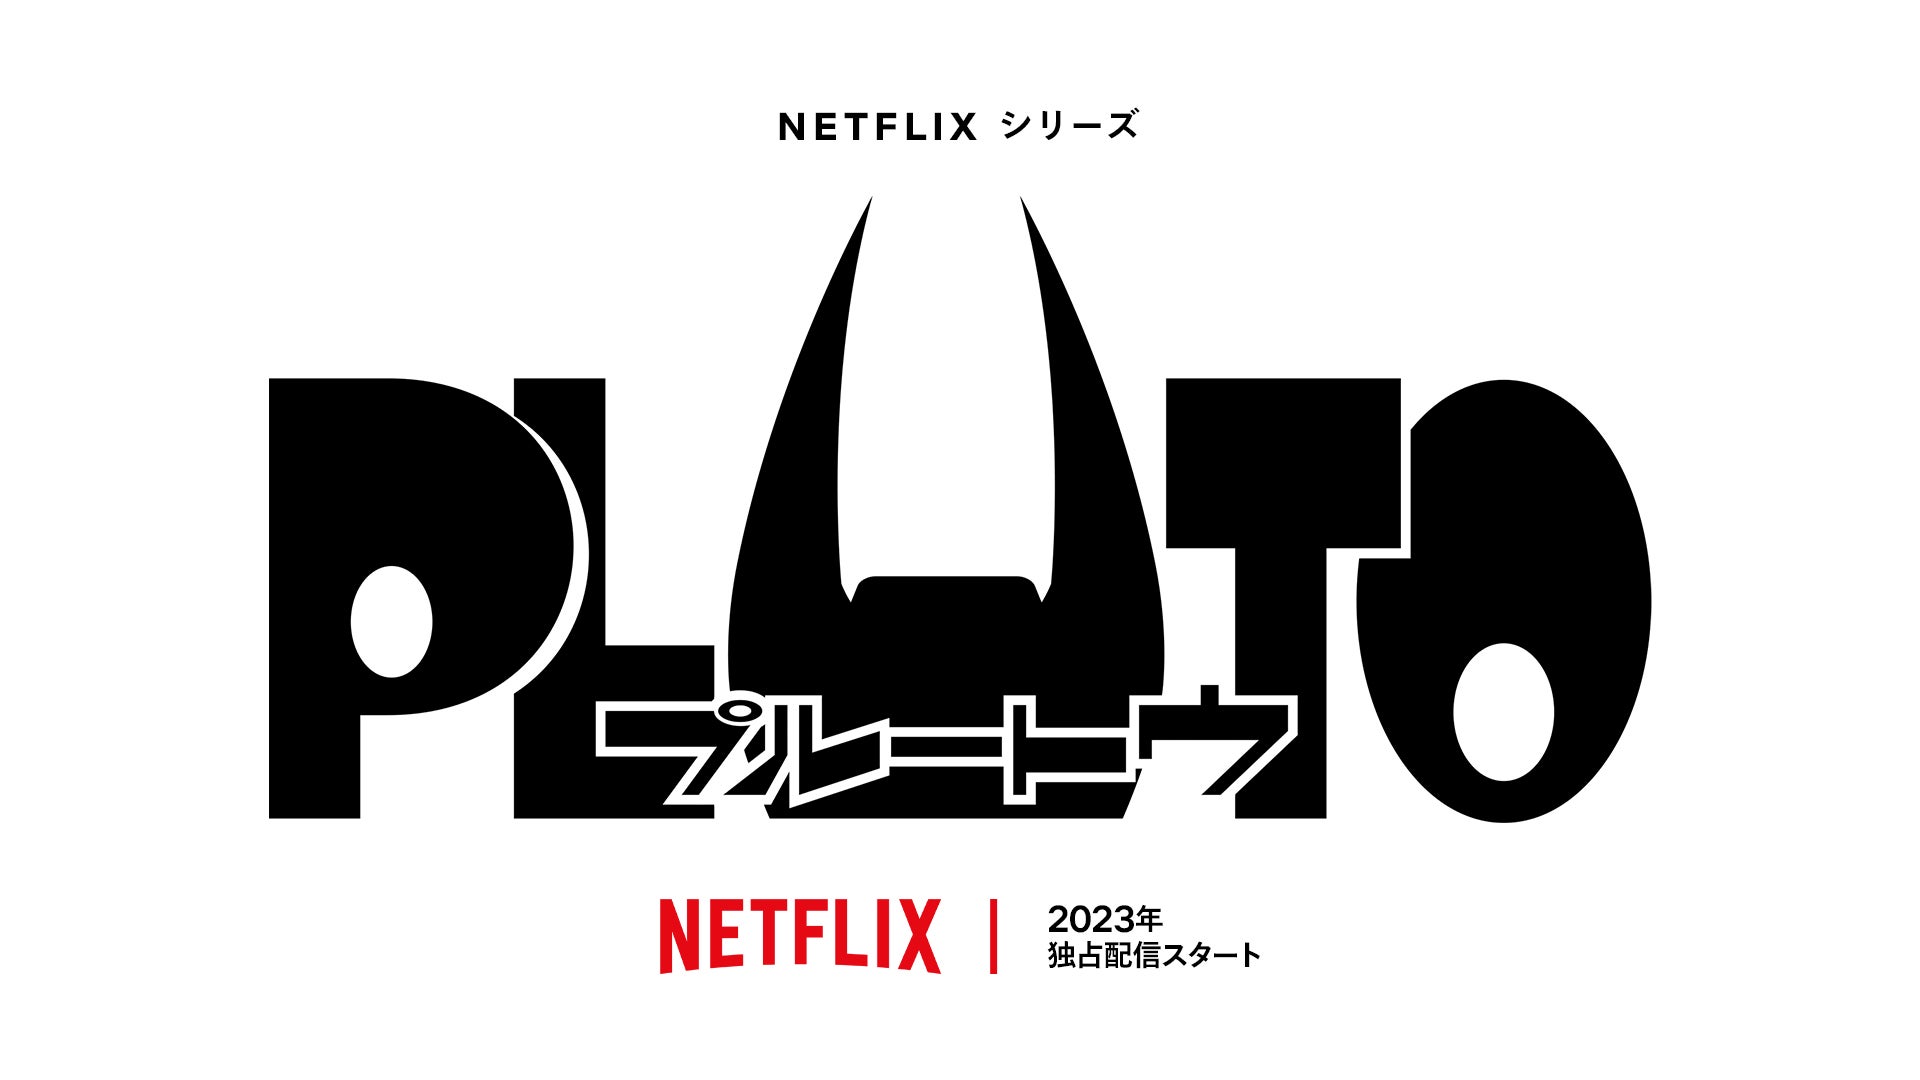 Netflix logo poster for Pluto